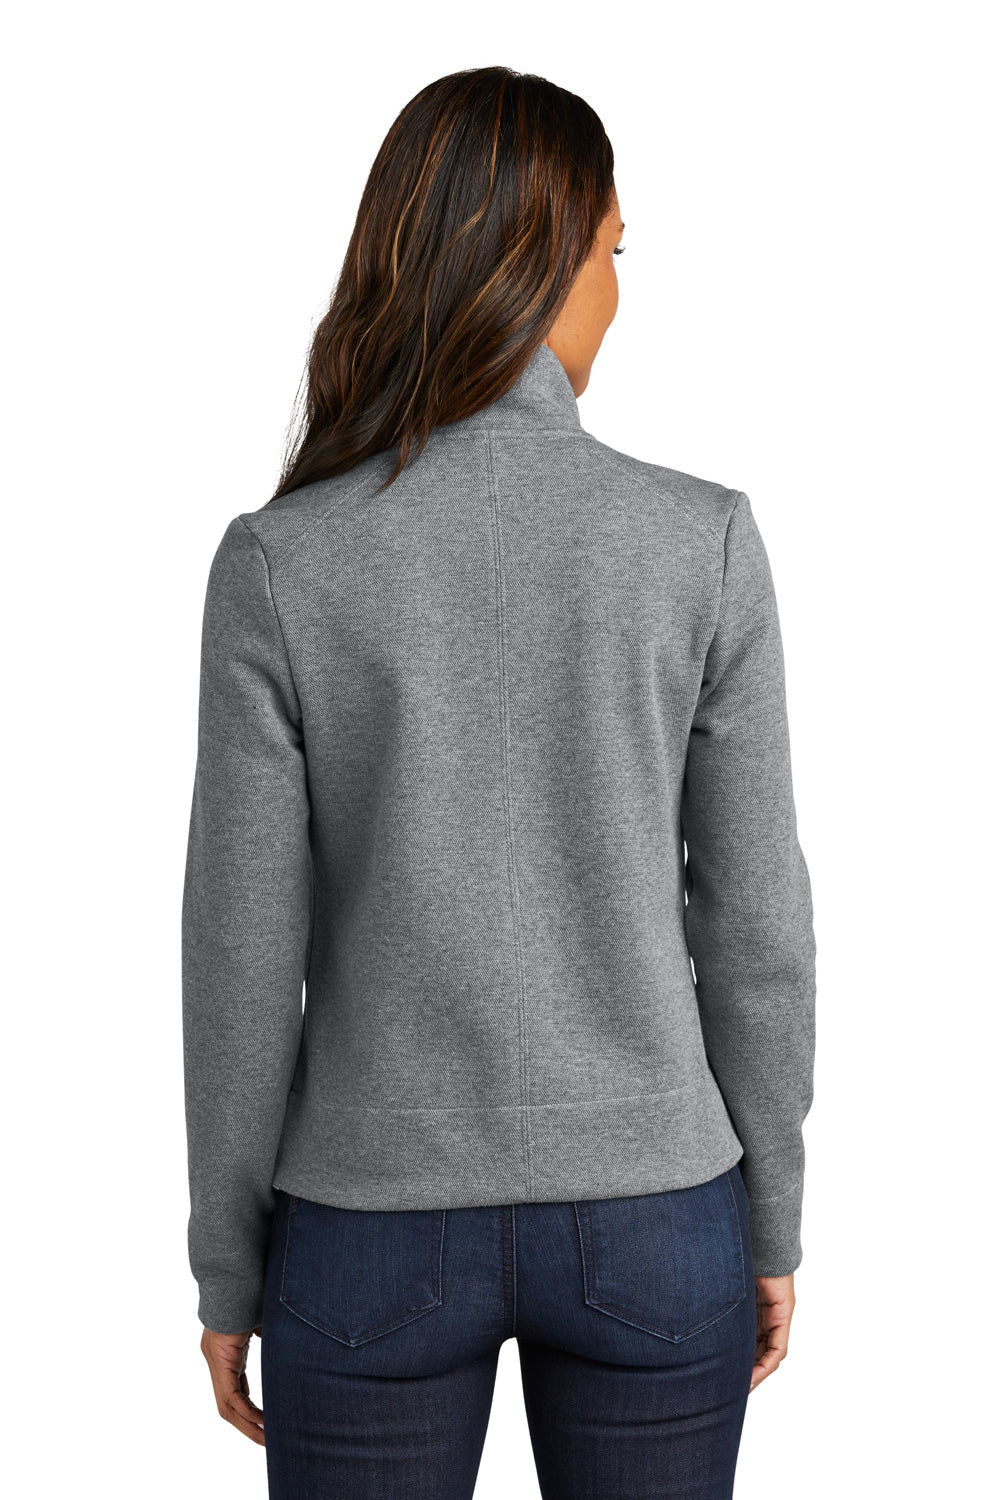 Port Authority L422 Womens Network Fleece Full Zip Jacket Heather Grey Back